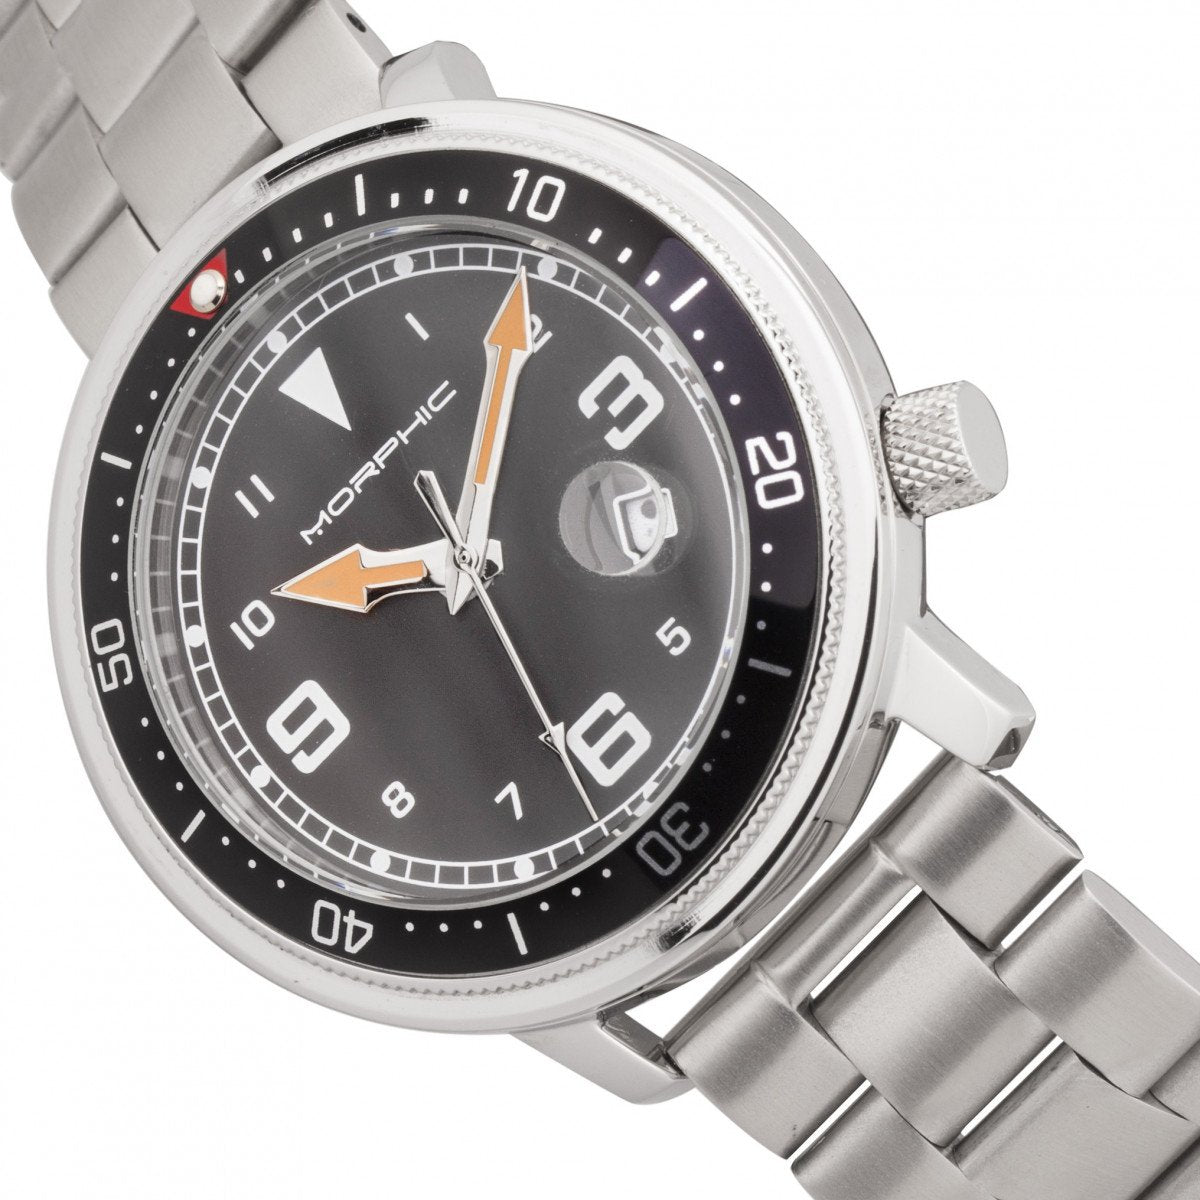 Morphic M74 Series Bracelet Watch w/Magnified Date Display - Gunmetal/Black & Silver/Brown - MPH7407